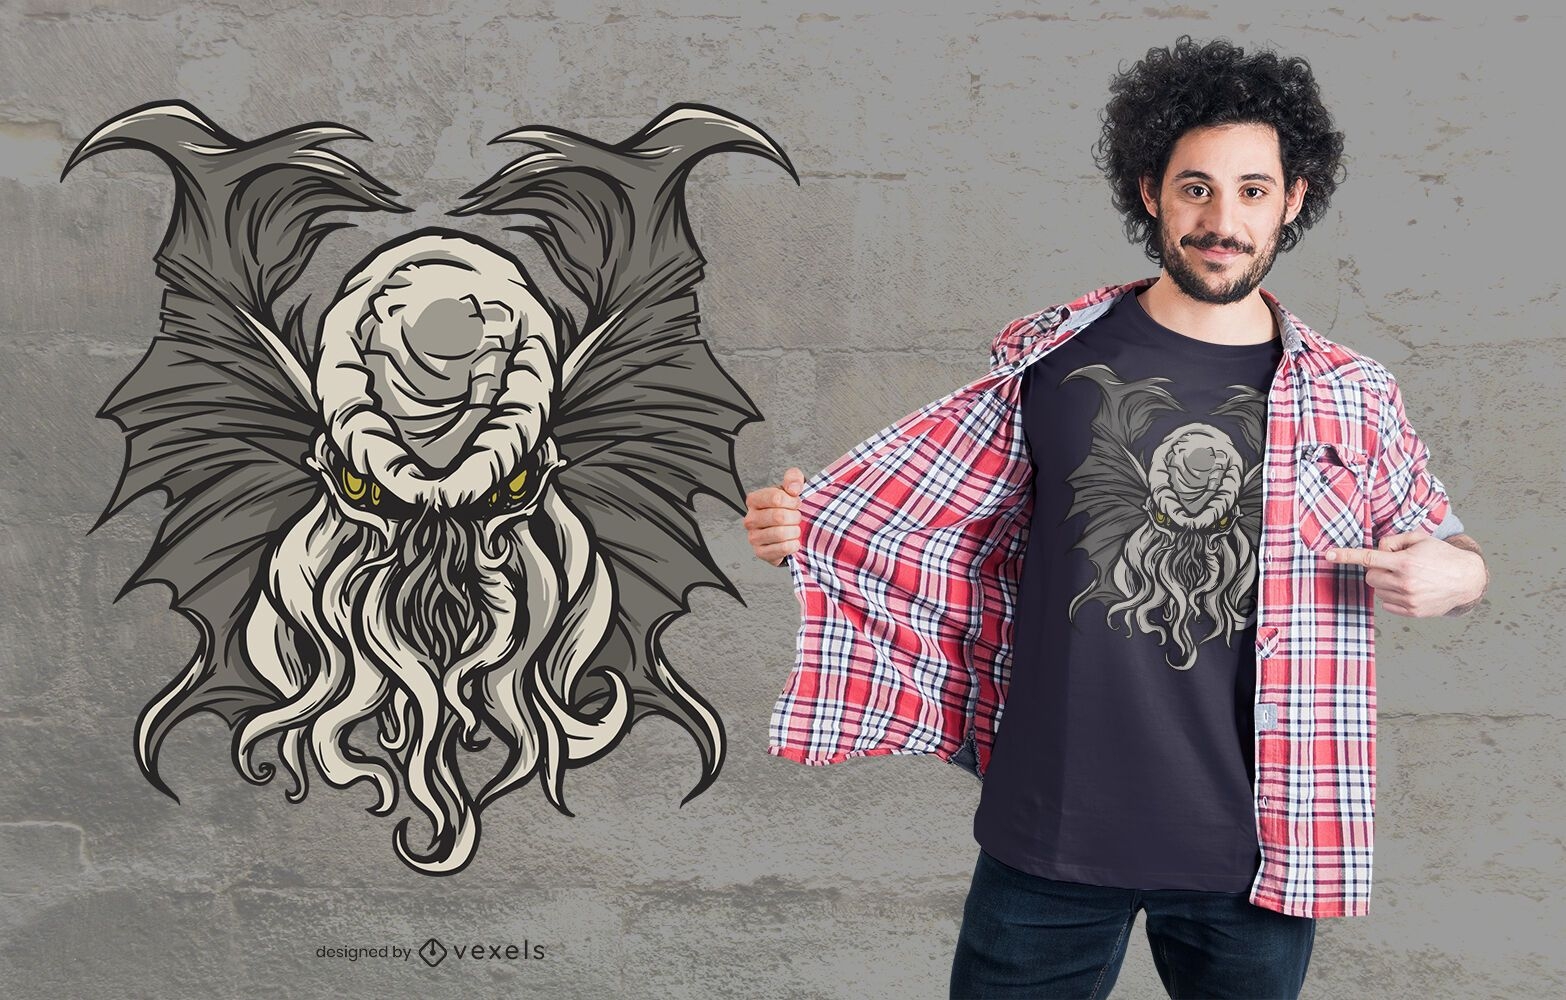 Cthulhu entity t-shirt design